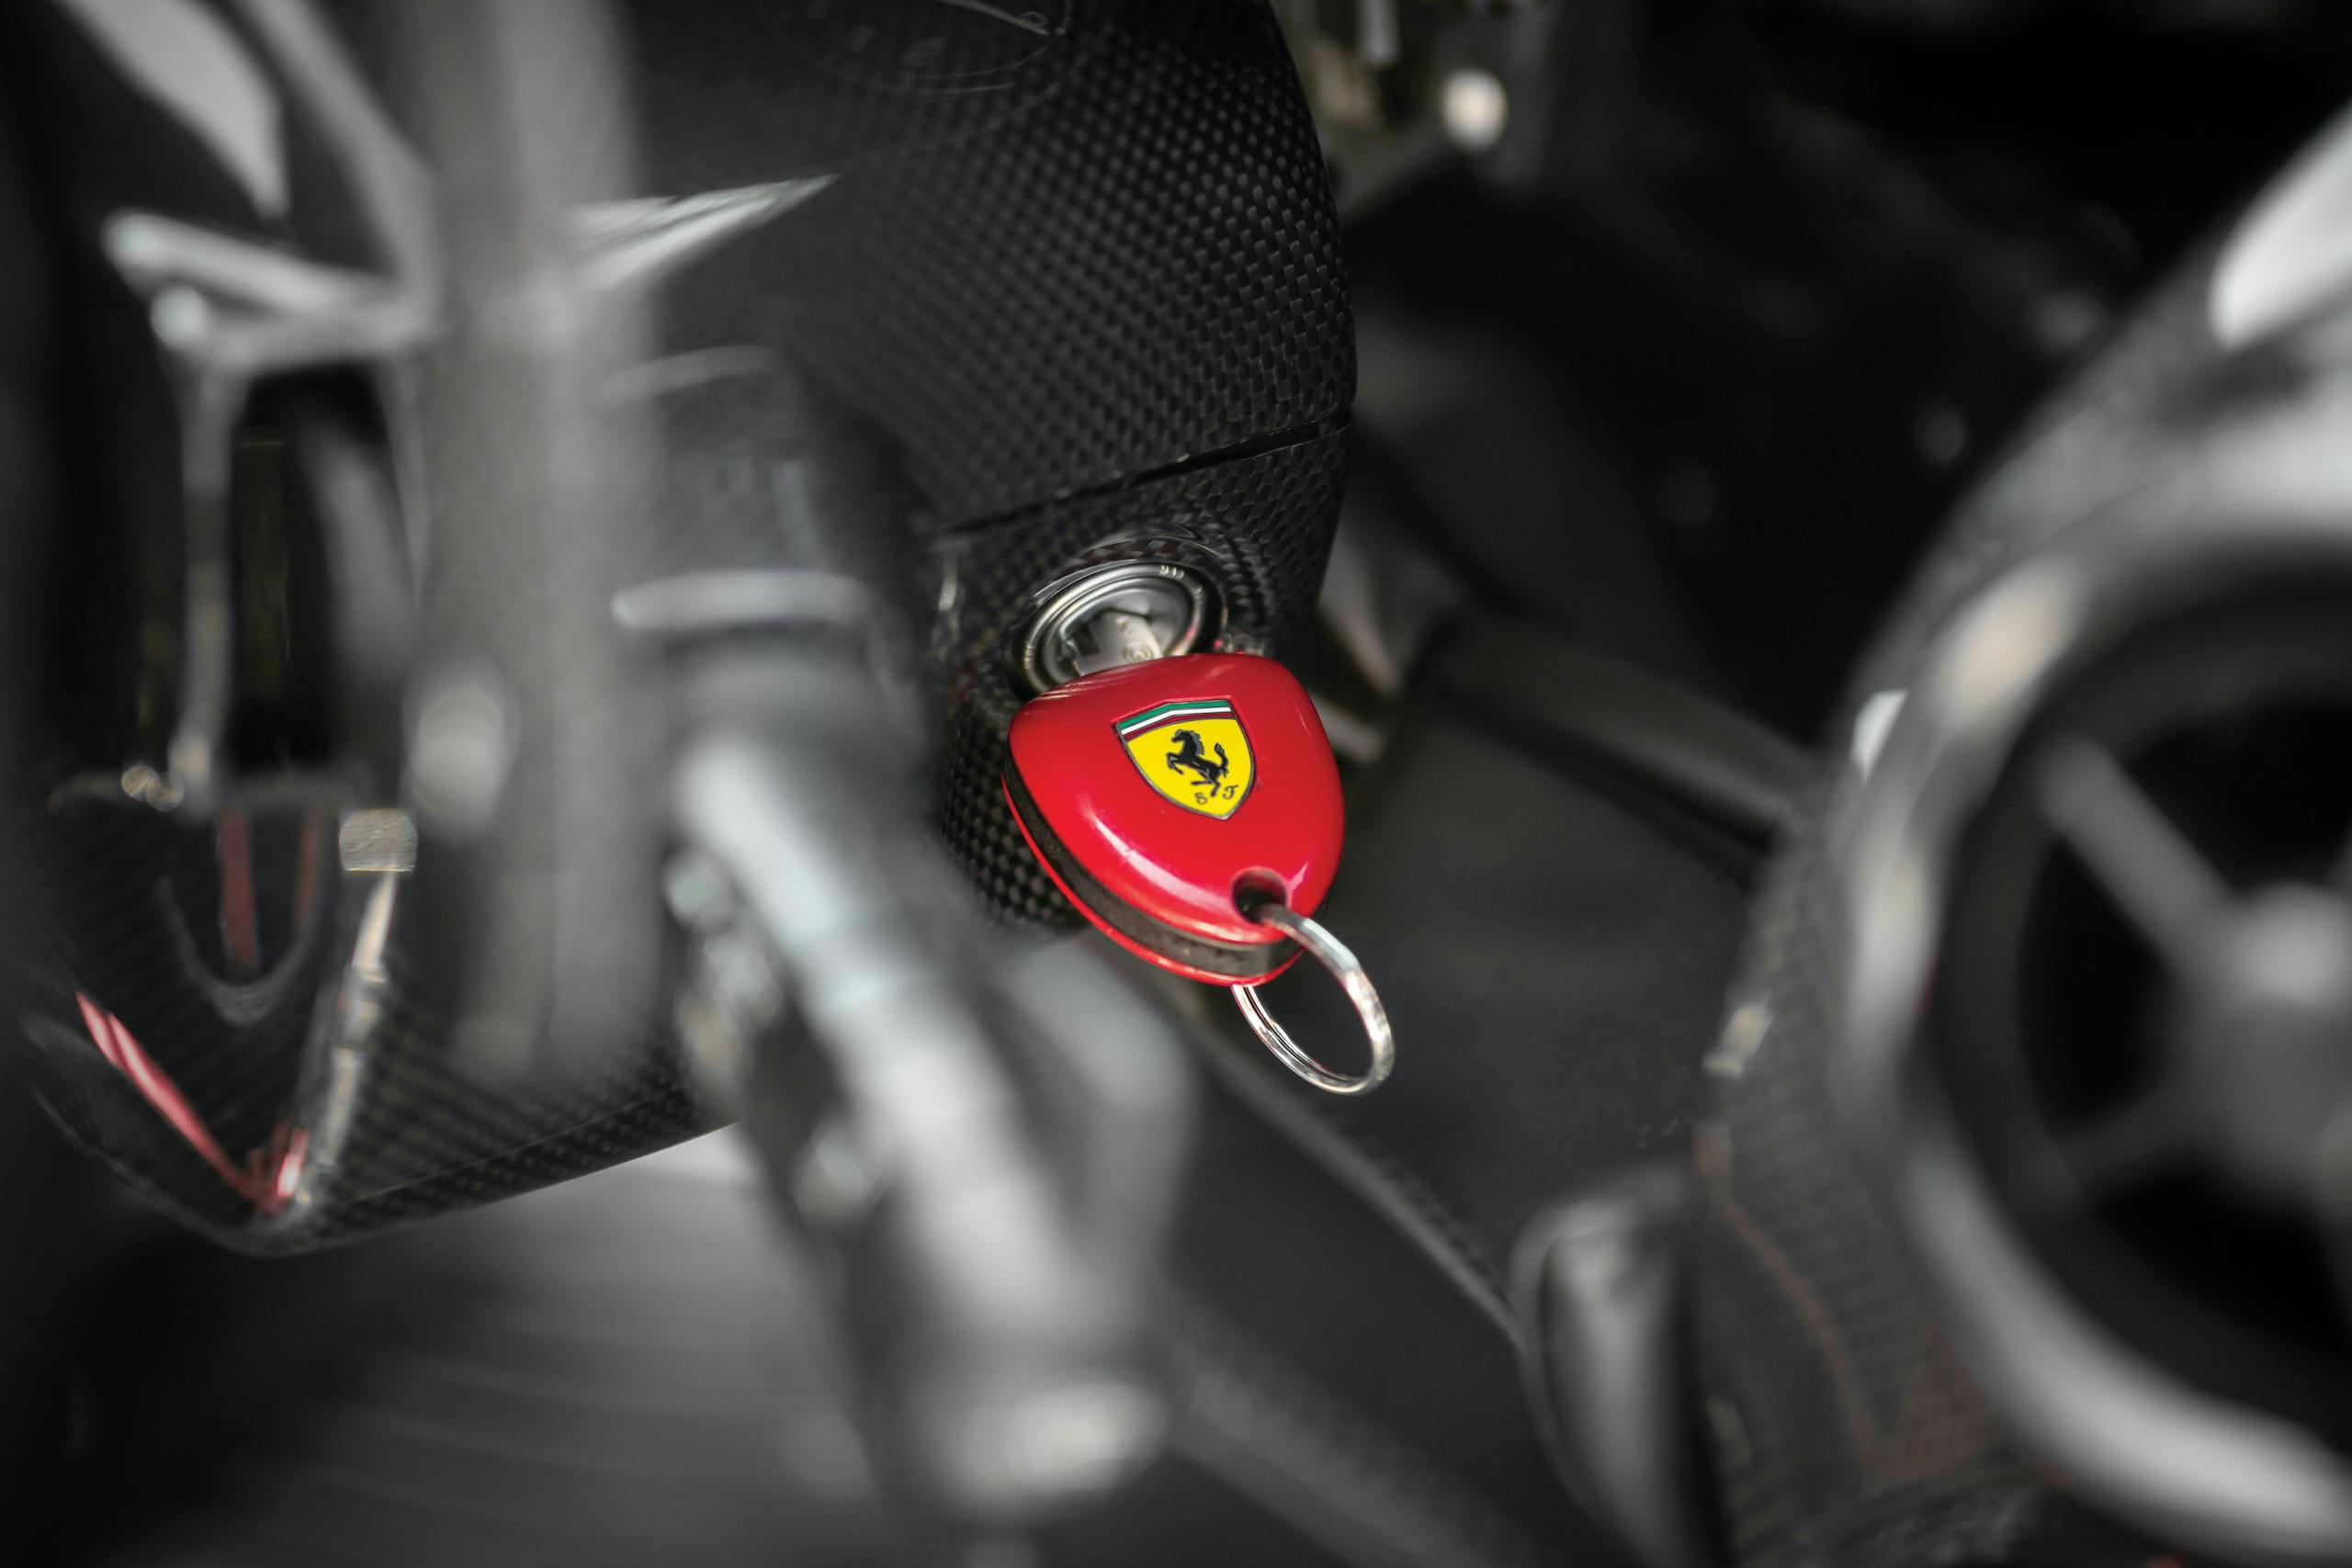 2003 Ferrari Enzo key detail